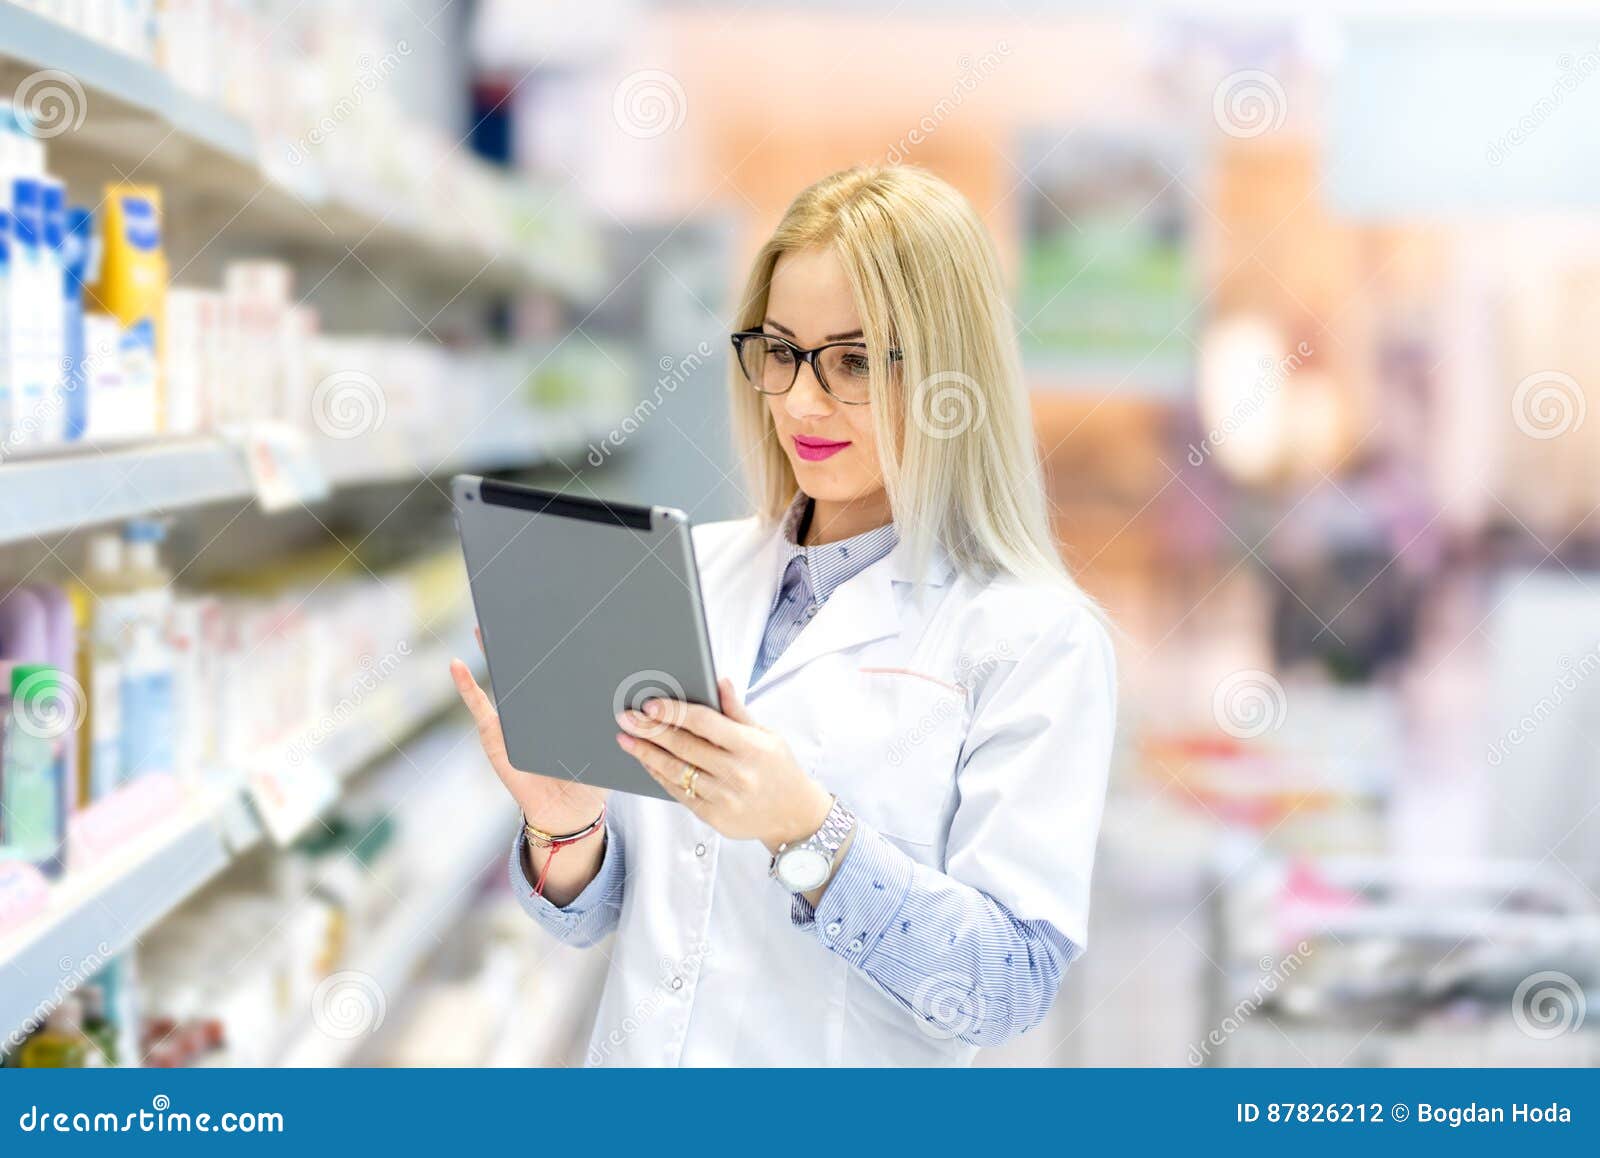 pharmacist chemist woman standing in pharmacy drugstore, smiling and using tablet